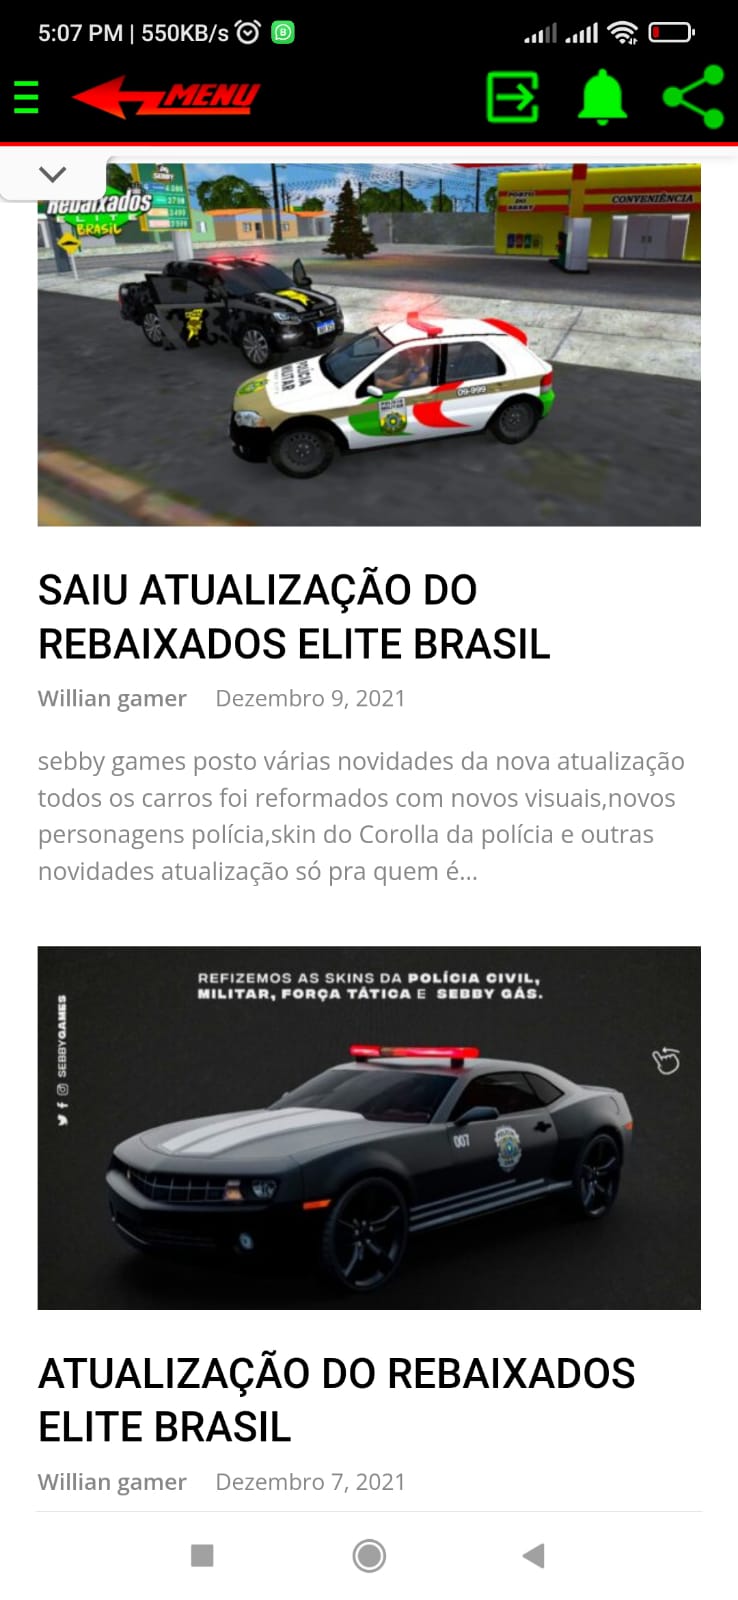 Rebaixados elite brasil how to buy cars